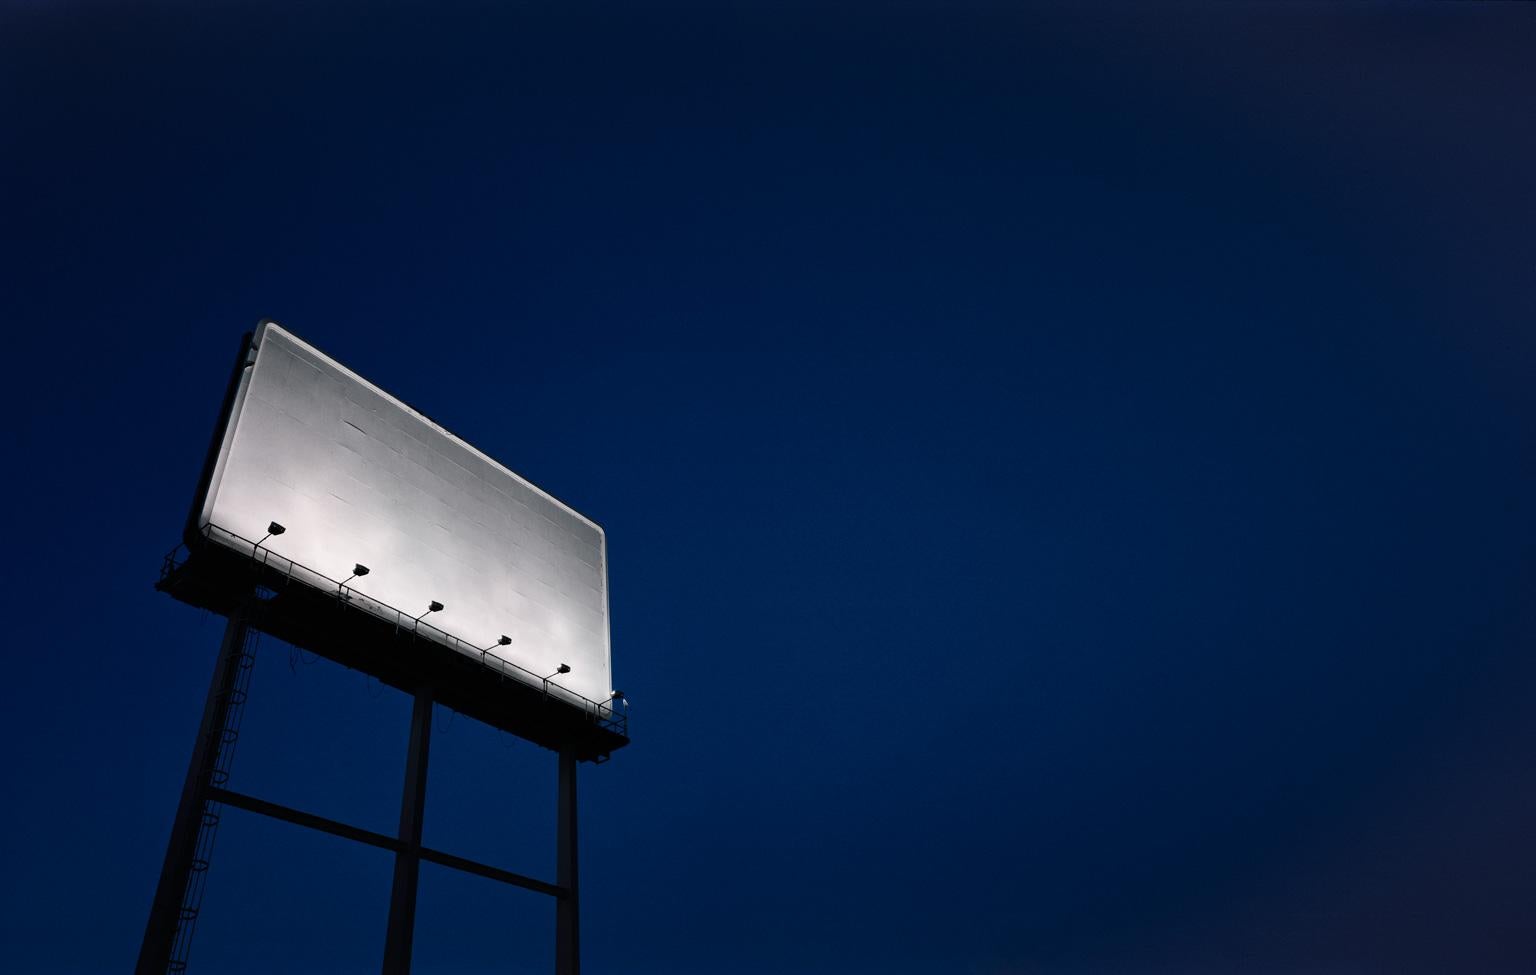 Billboard - large scale monochromatic photograph of iconic Americana billboard